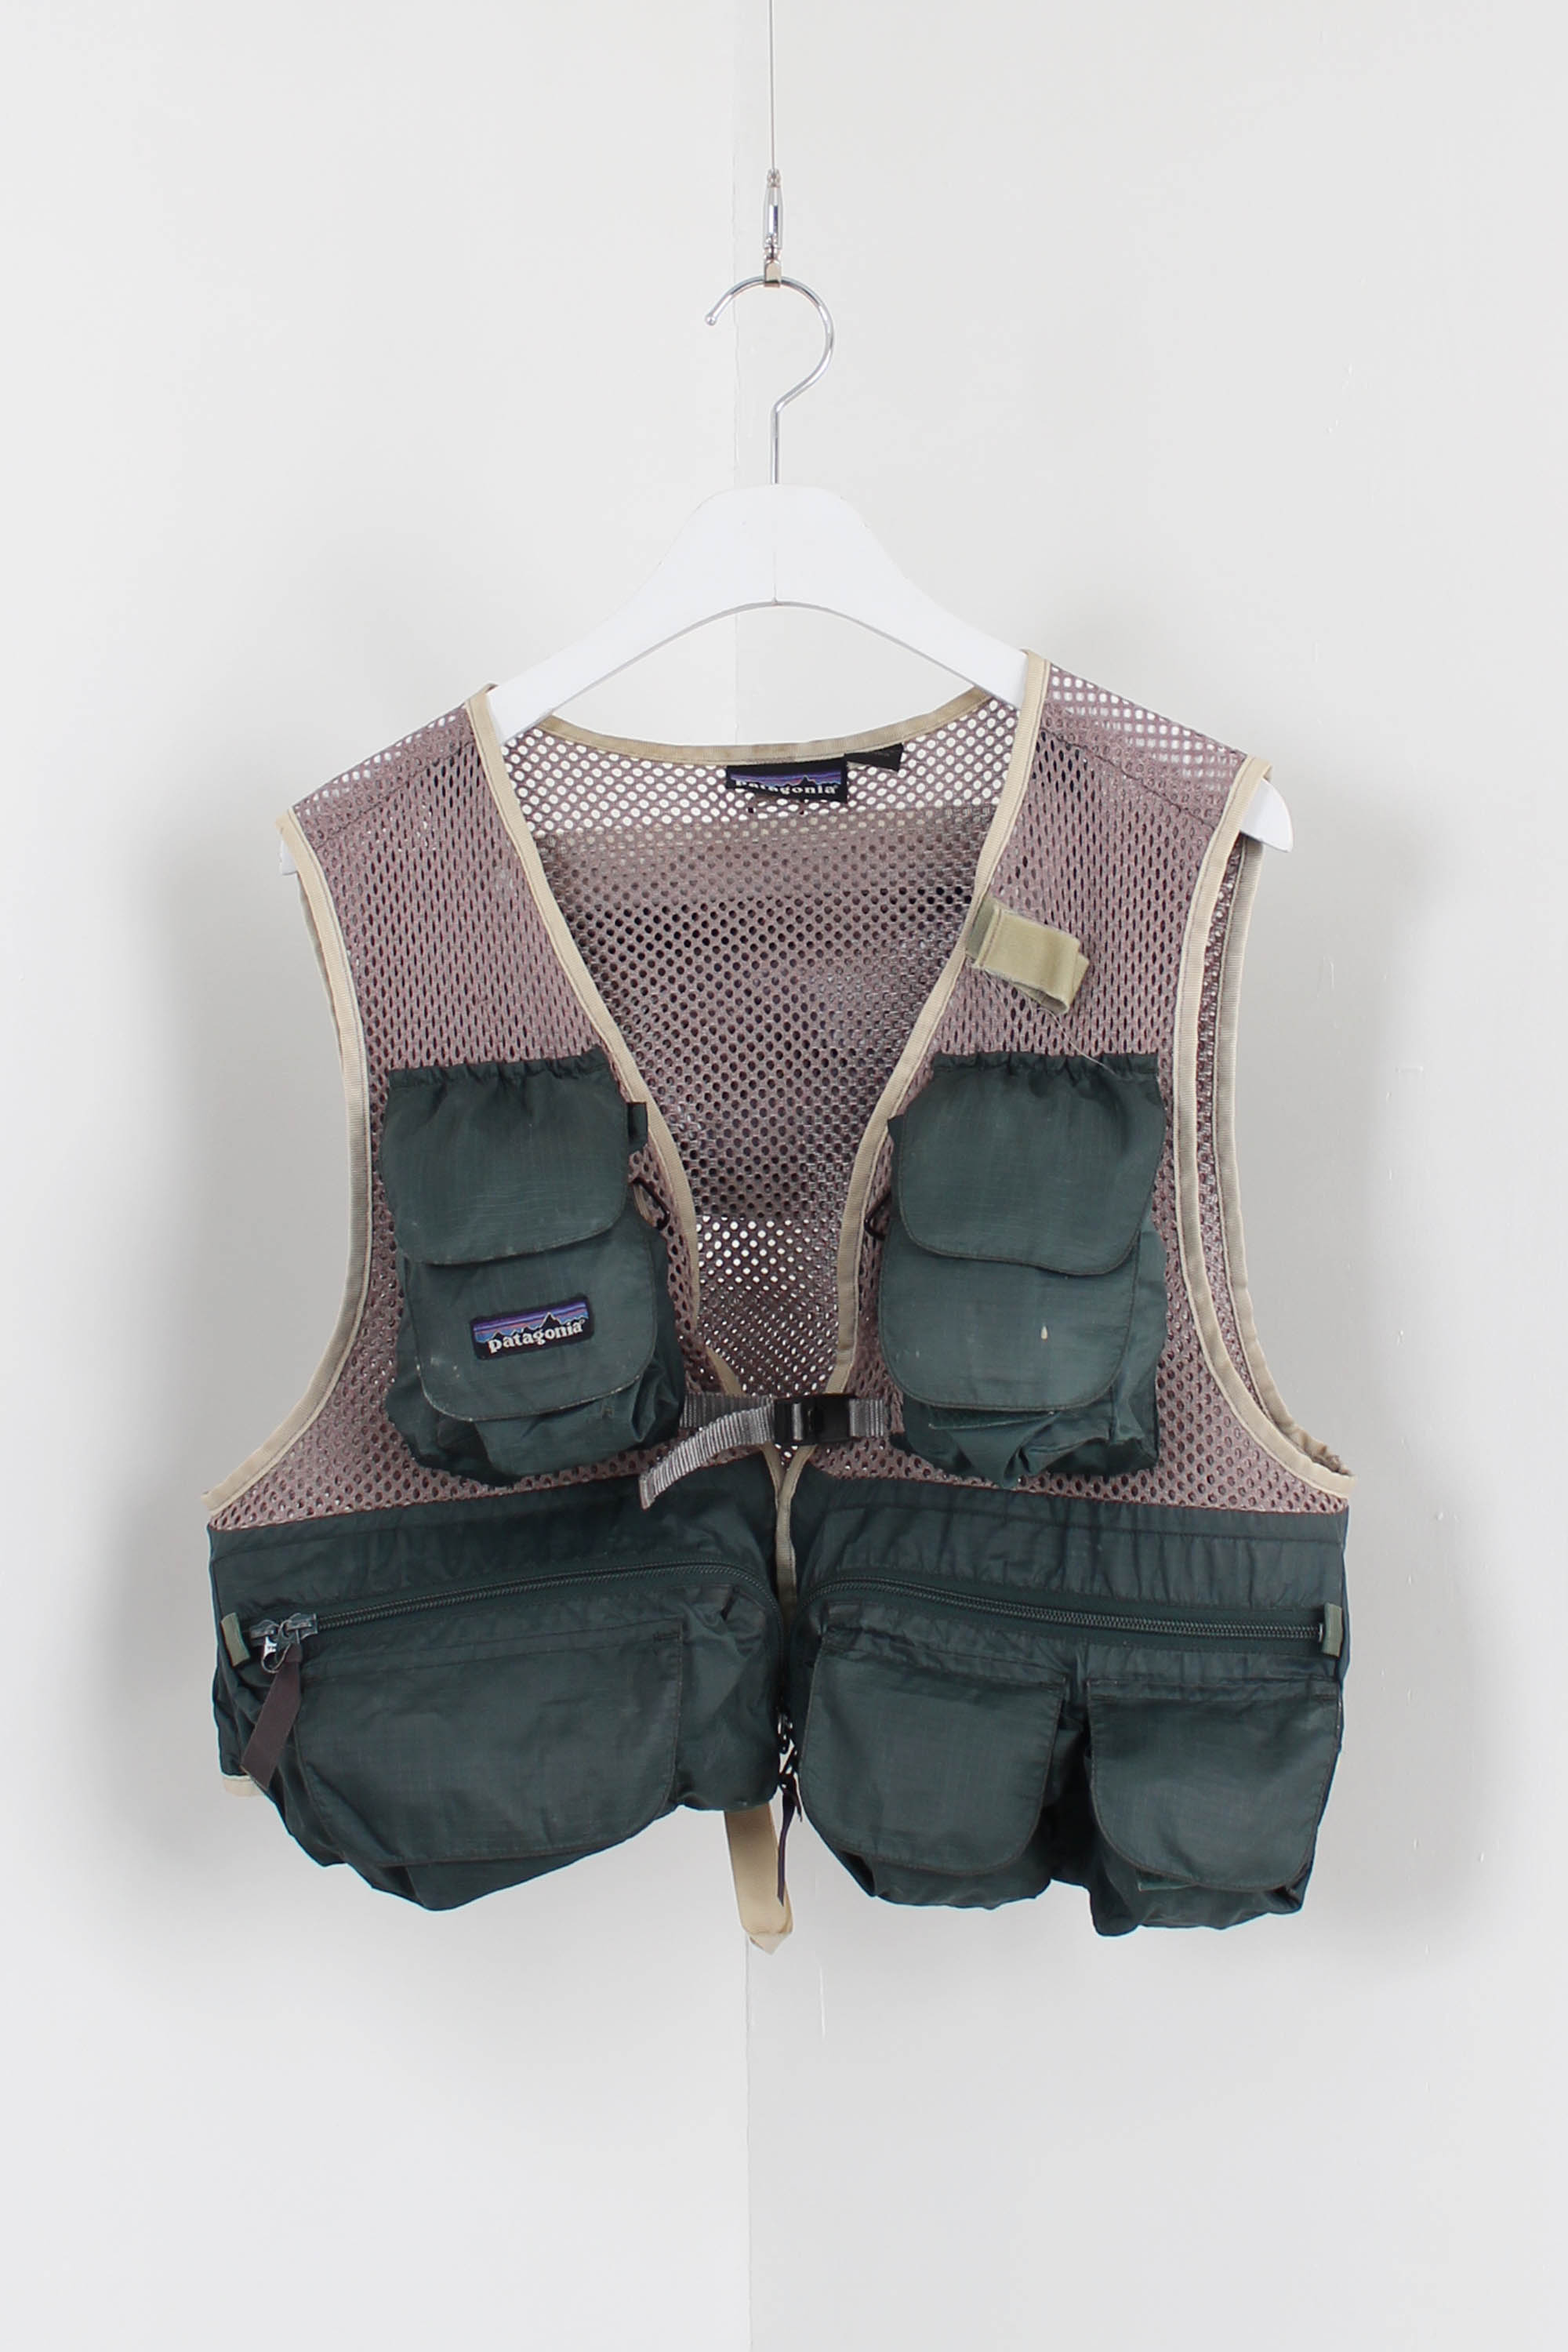 90s patagonia fishing vest